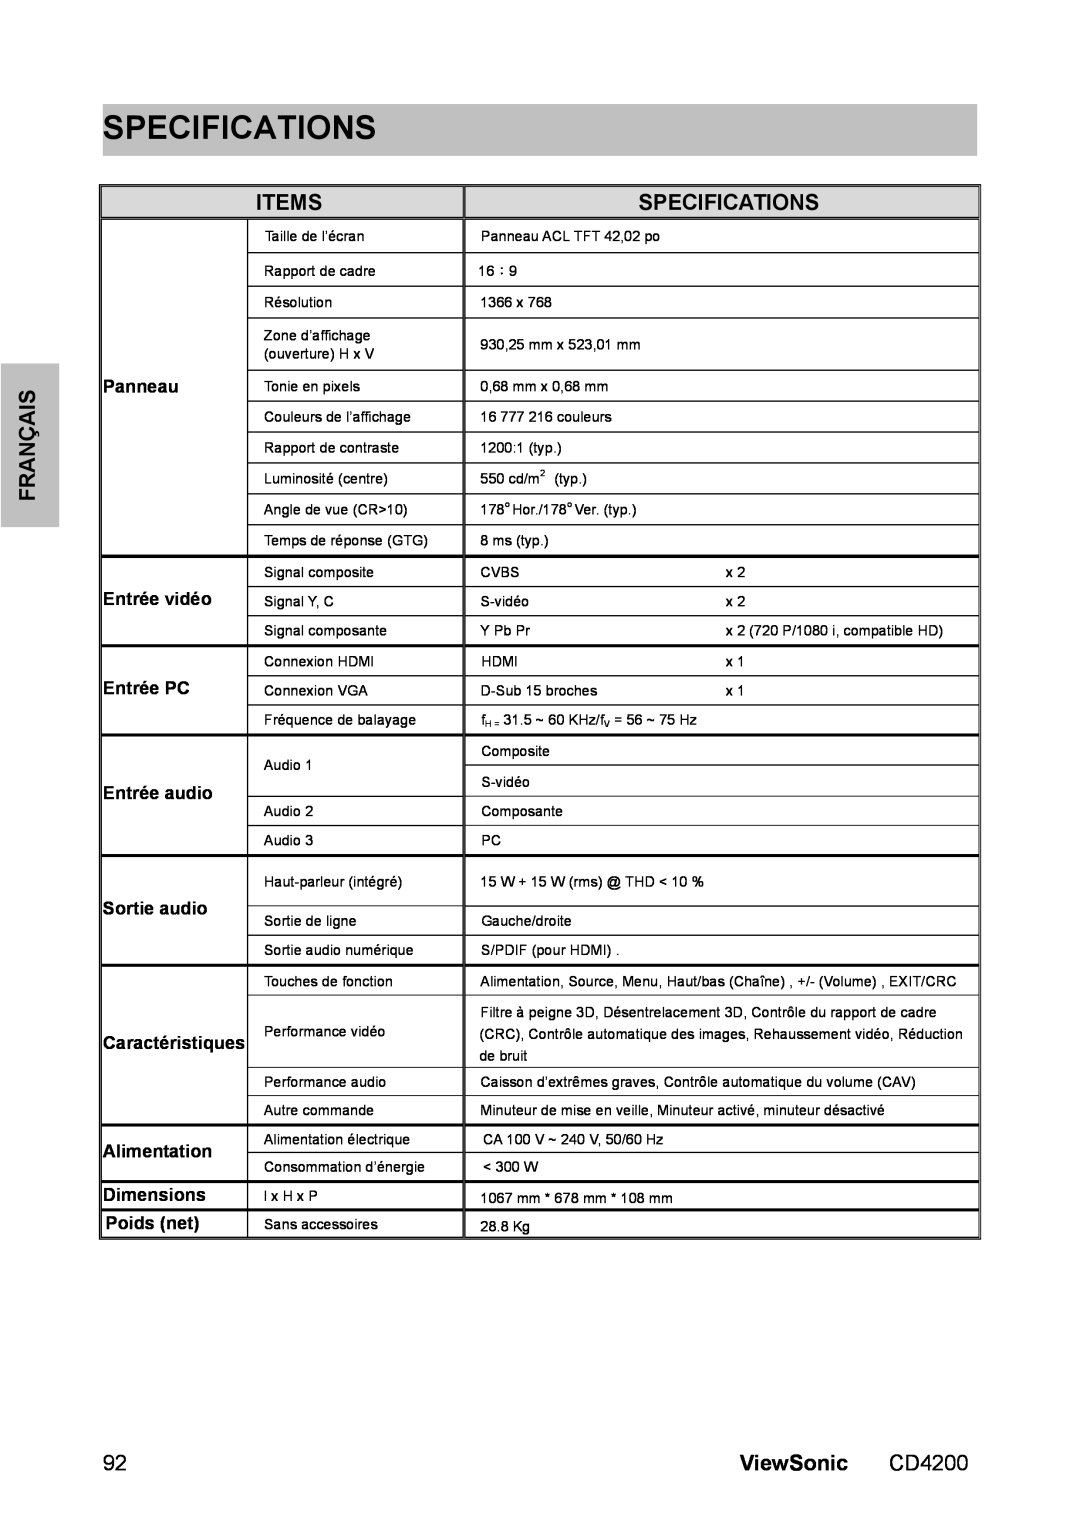 ViewSonic CD4200 manual Specifications, Items, Français, ViewSonic 